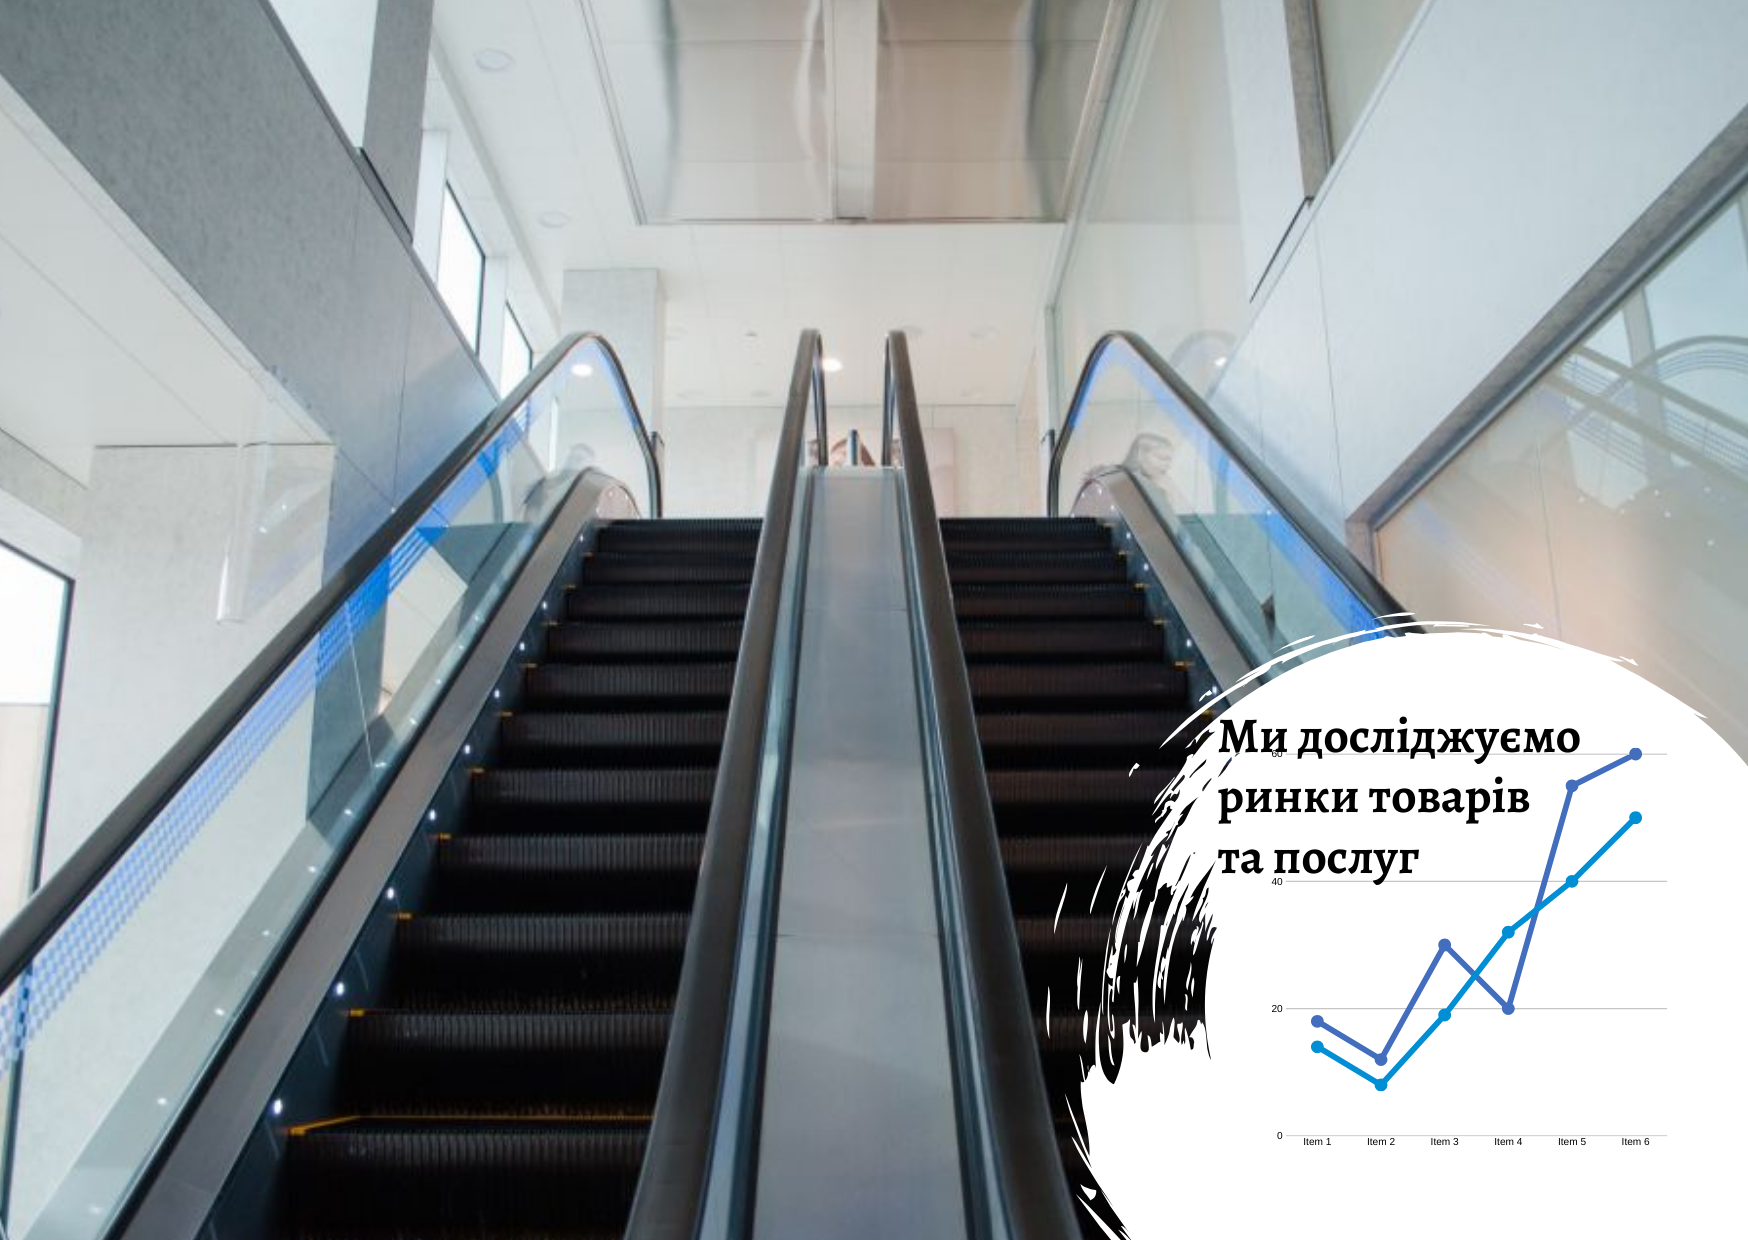 Ukrainian elevators and escalators market